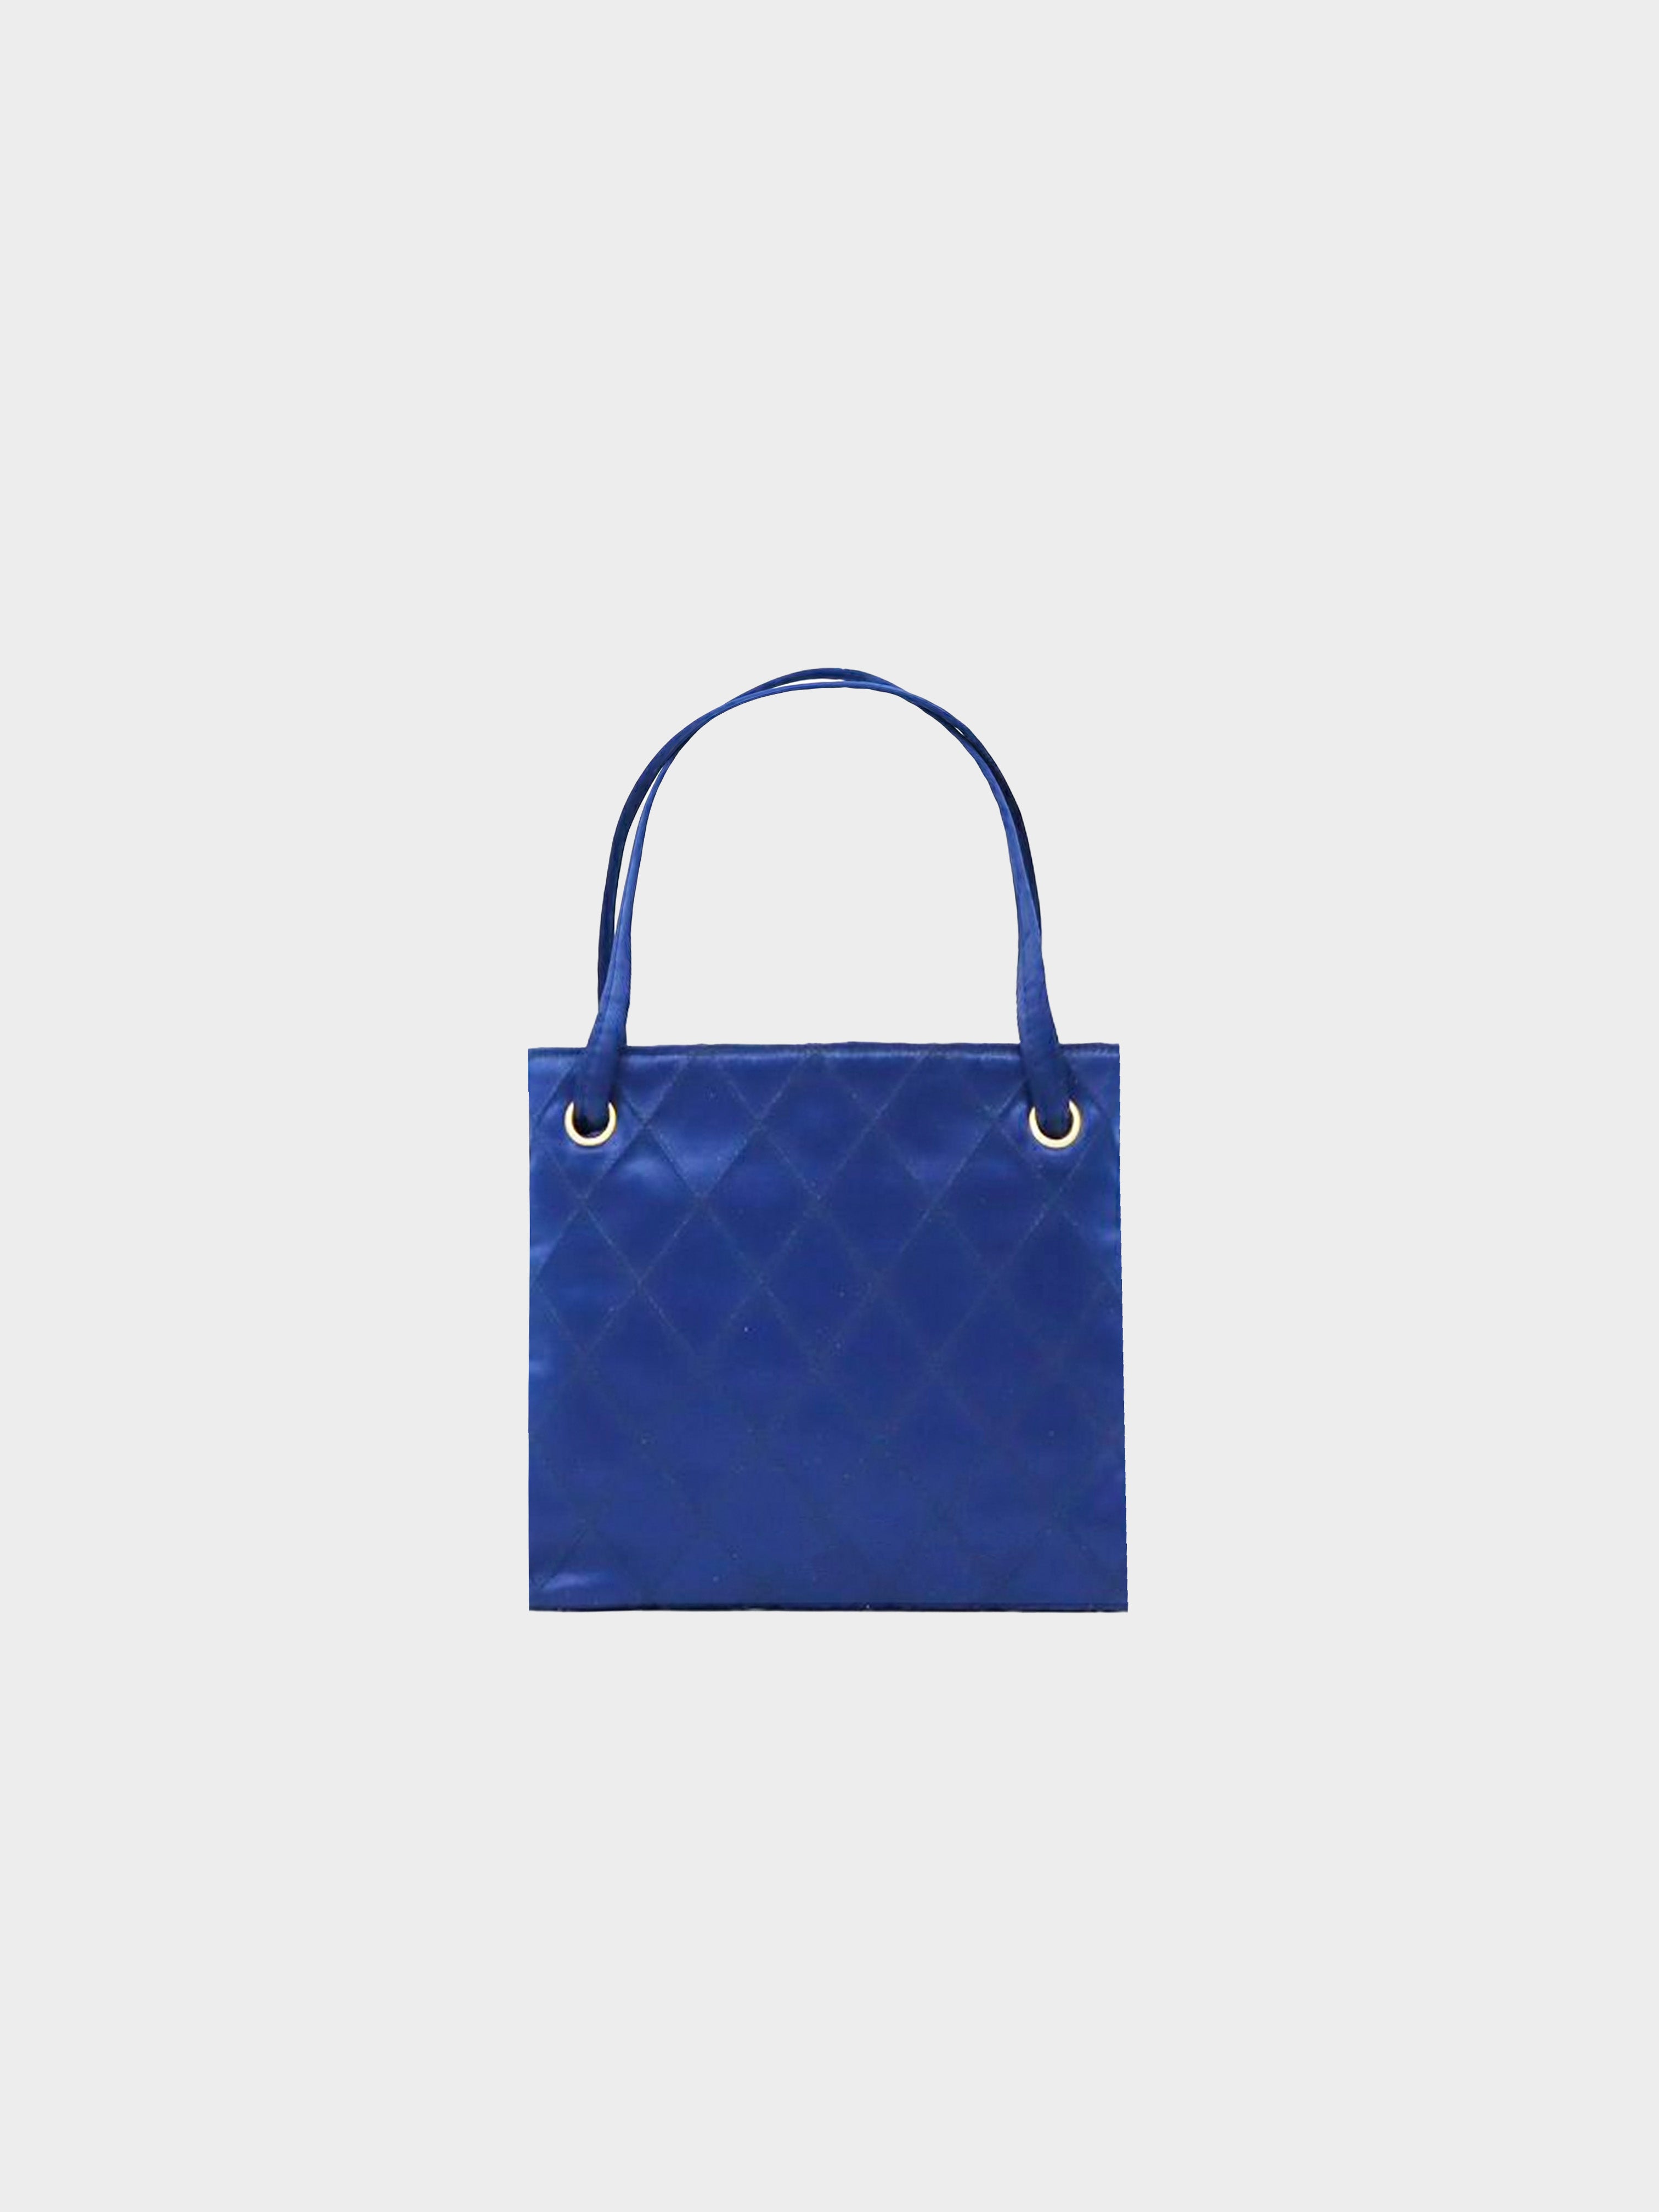 Chanel Late 1980s Cobalt Blue Satin Handbag